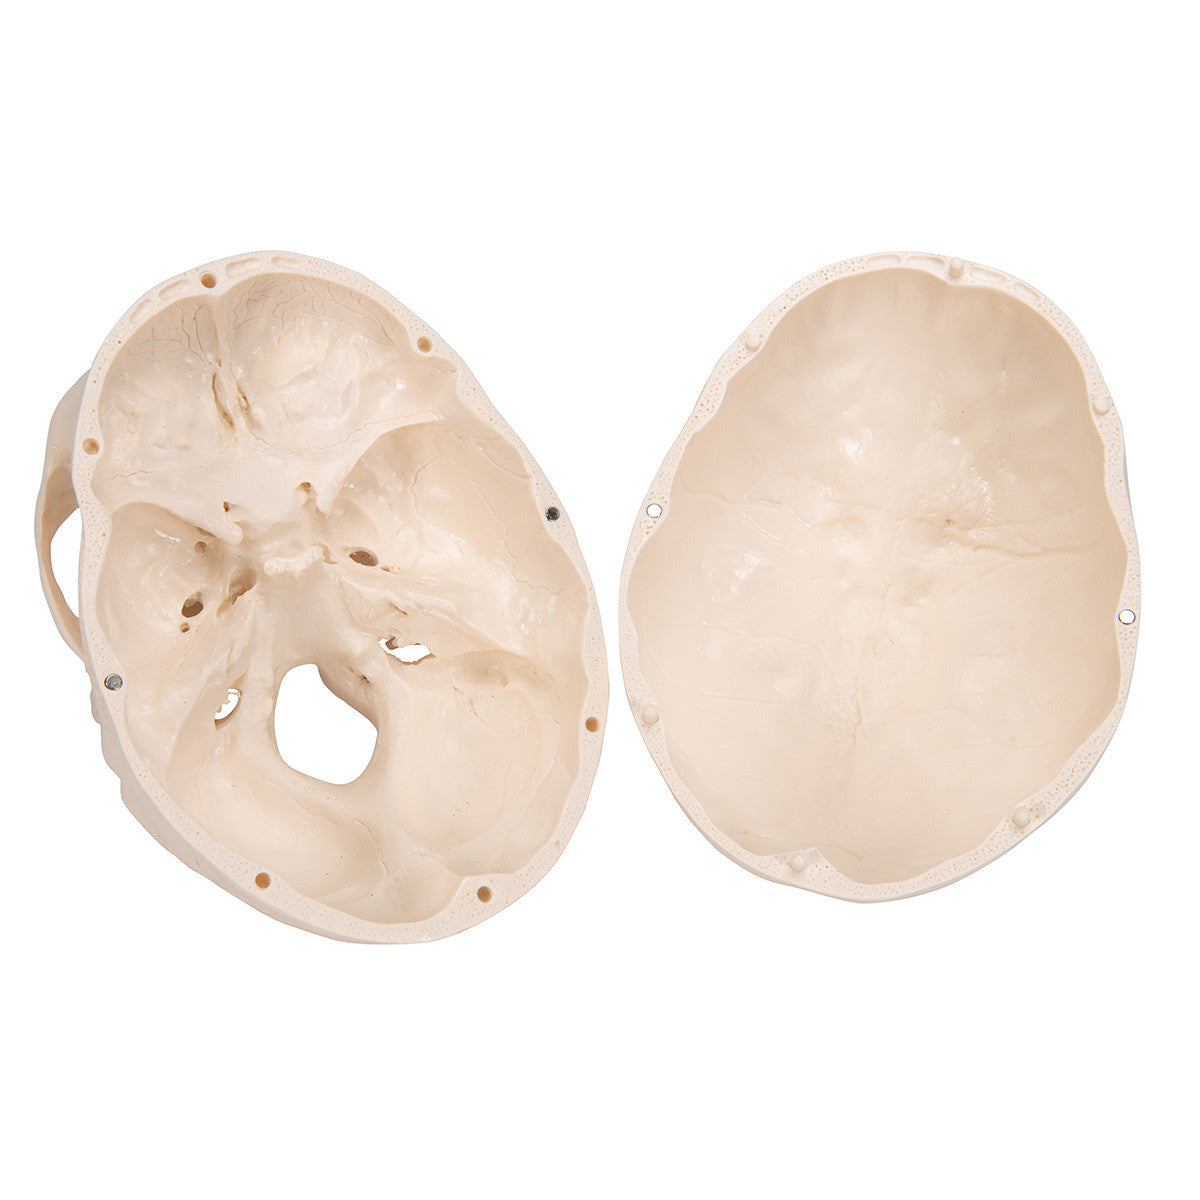 Standard Human Skull, natural cast, adult - cap removed